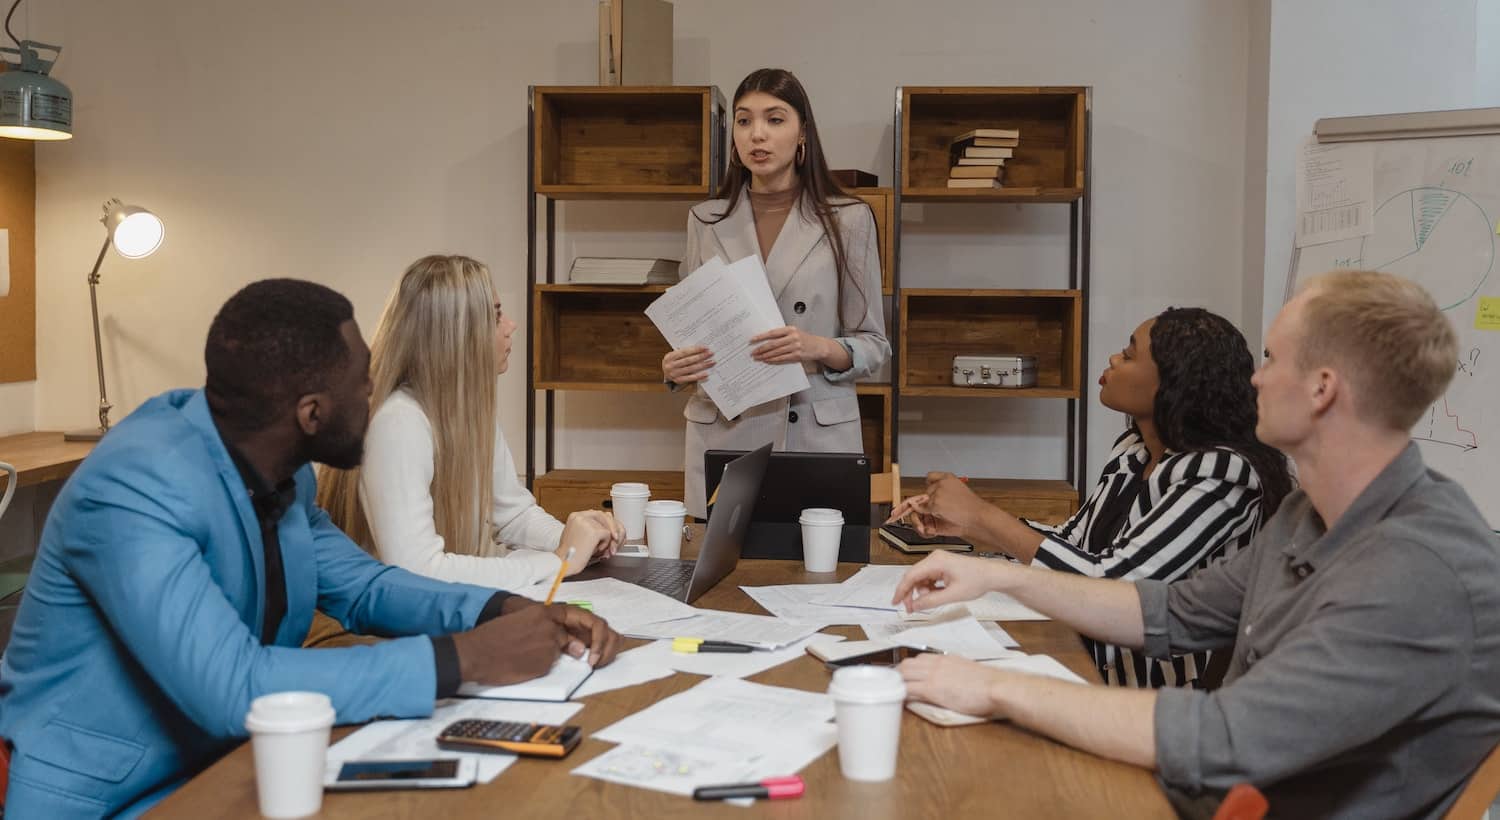 Leadership in the workplace - meeting